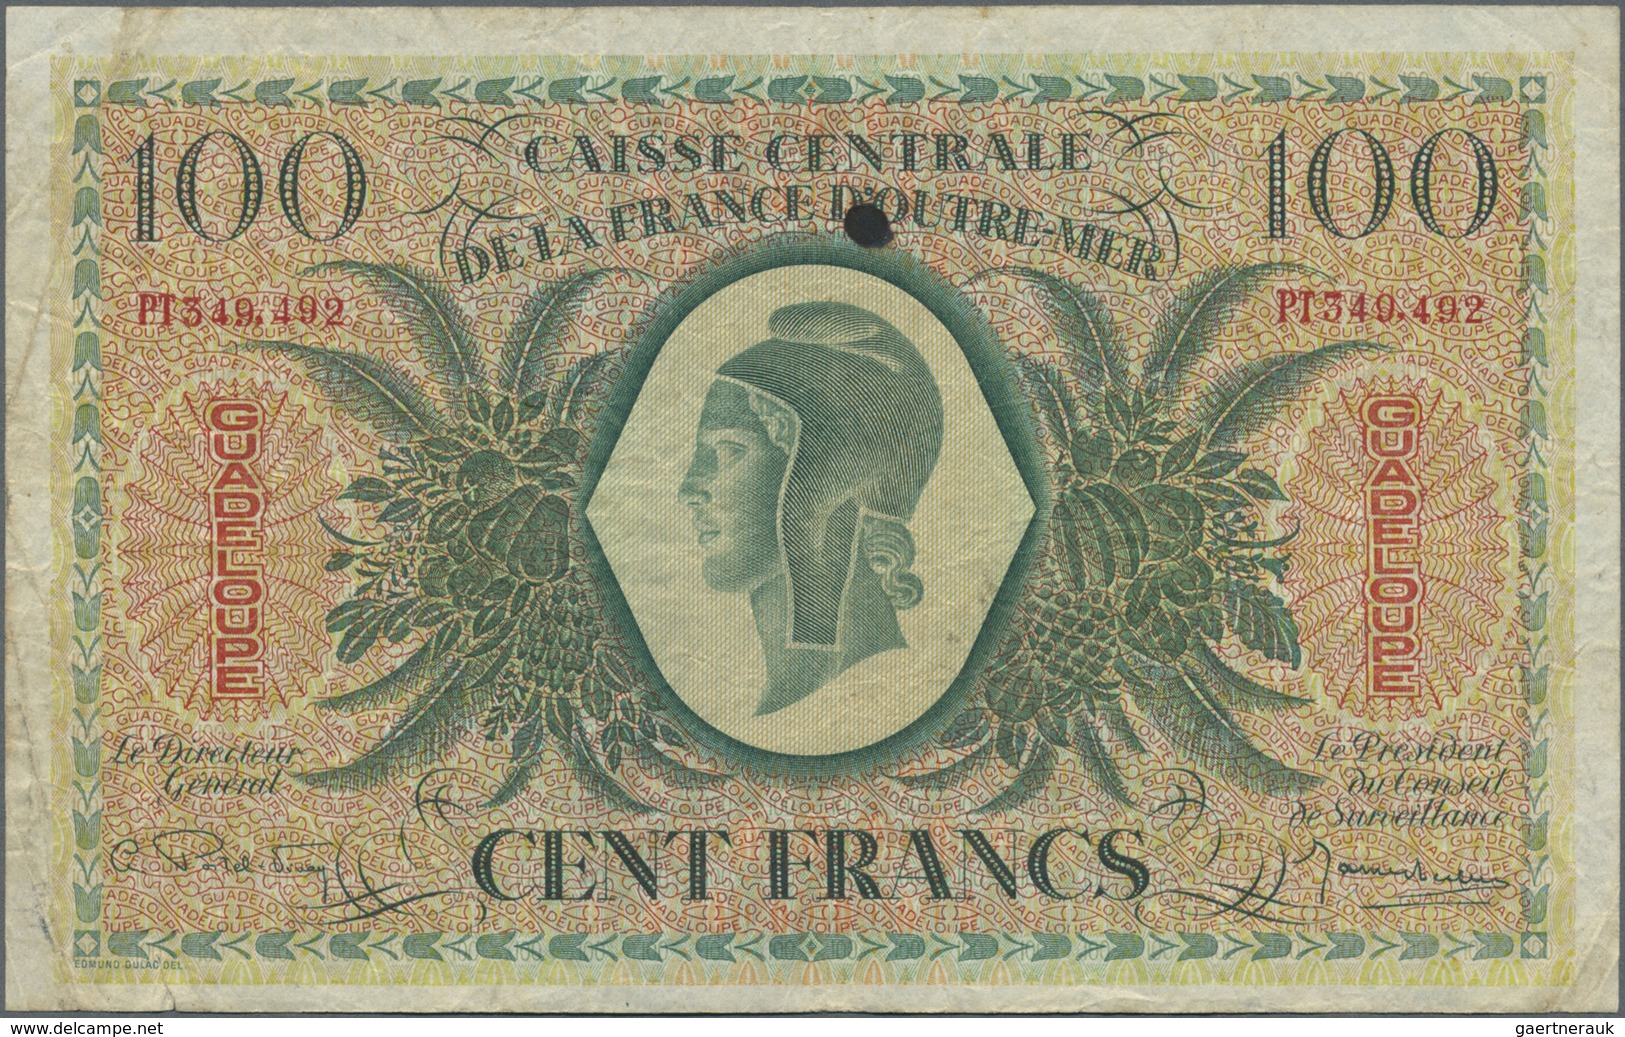 Guadeloupe: 100 Francs 1944 Caisse Centrale De La France D'Outre-Mer, P.29, Several Folds, Lightly Y - Other - America